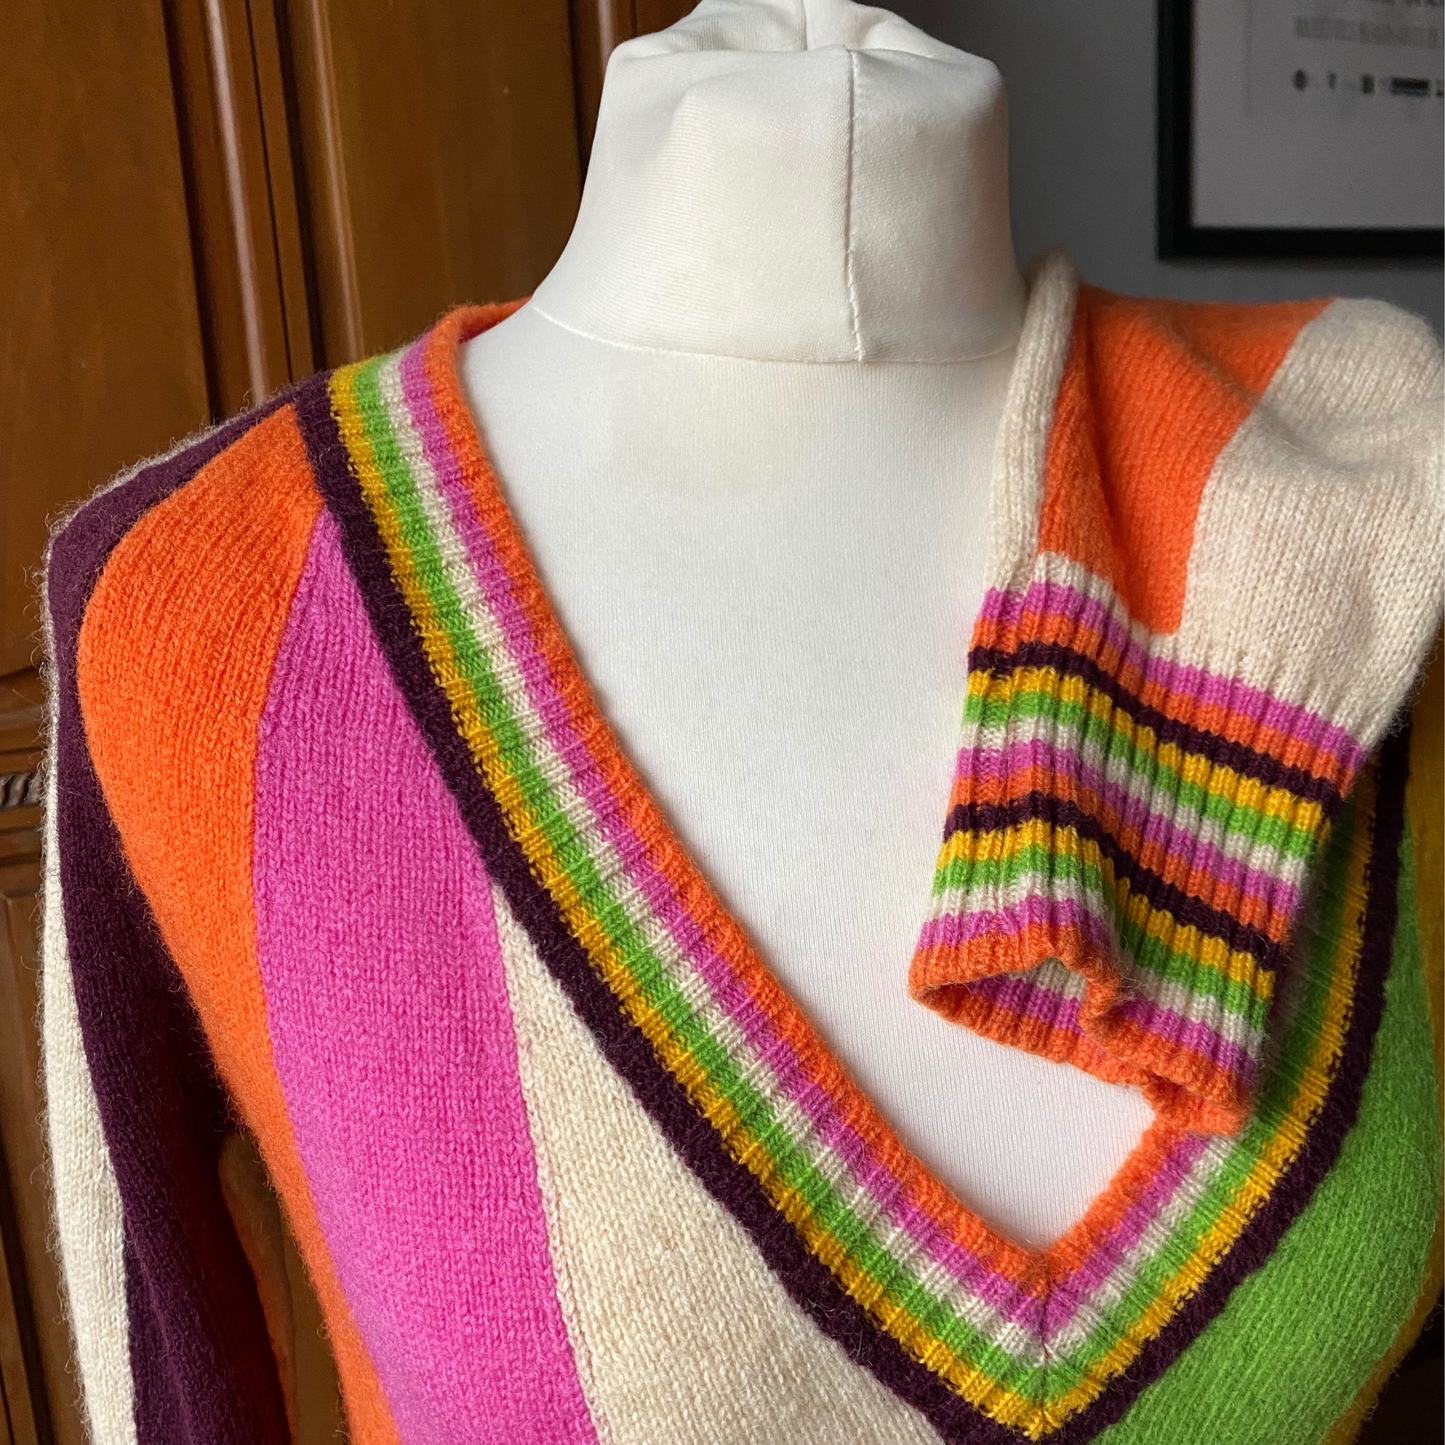 Vintage Italian Wool Multi Coloured Stripe V Neck Jumper.Approx UK size 8-10